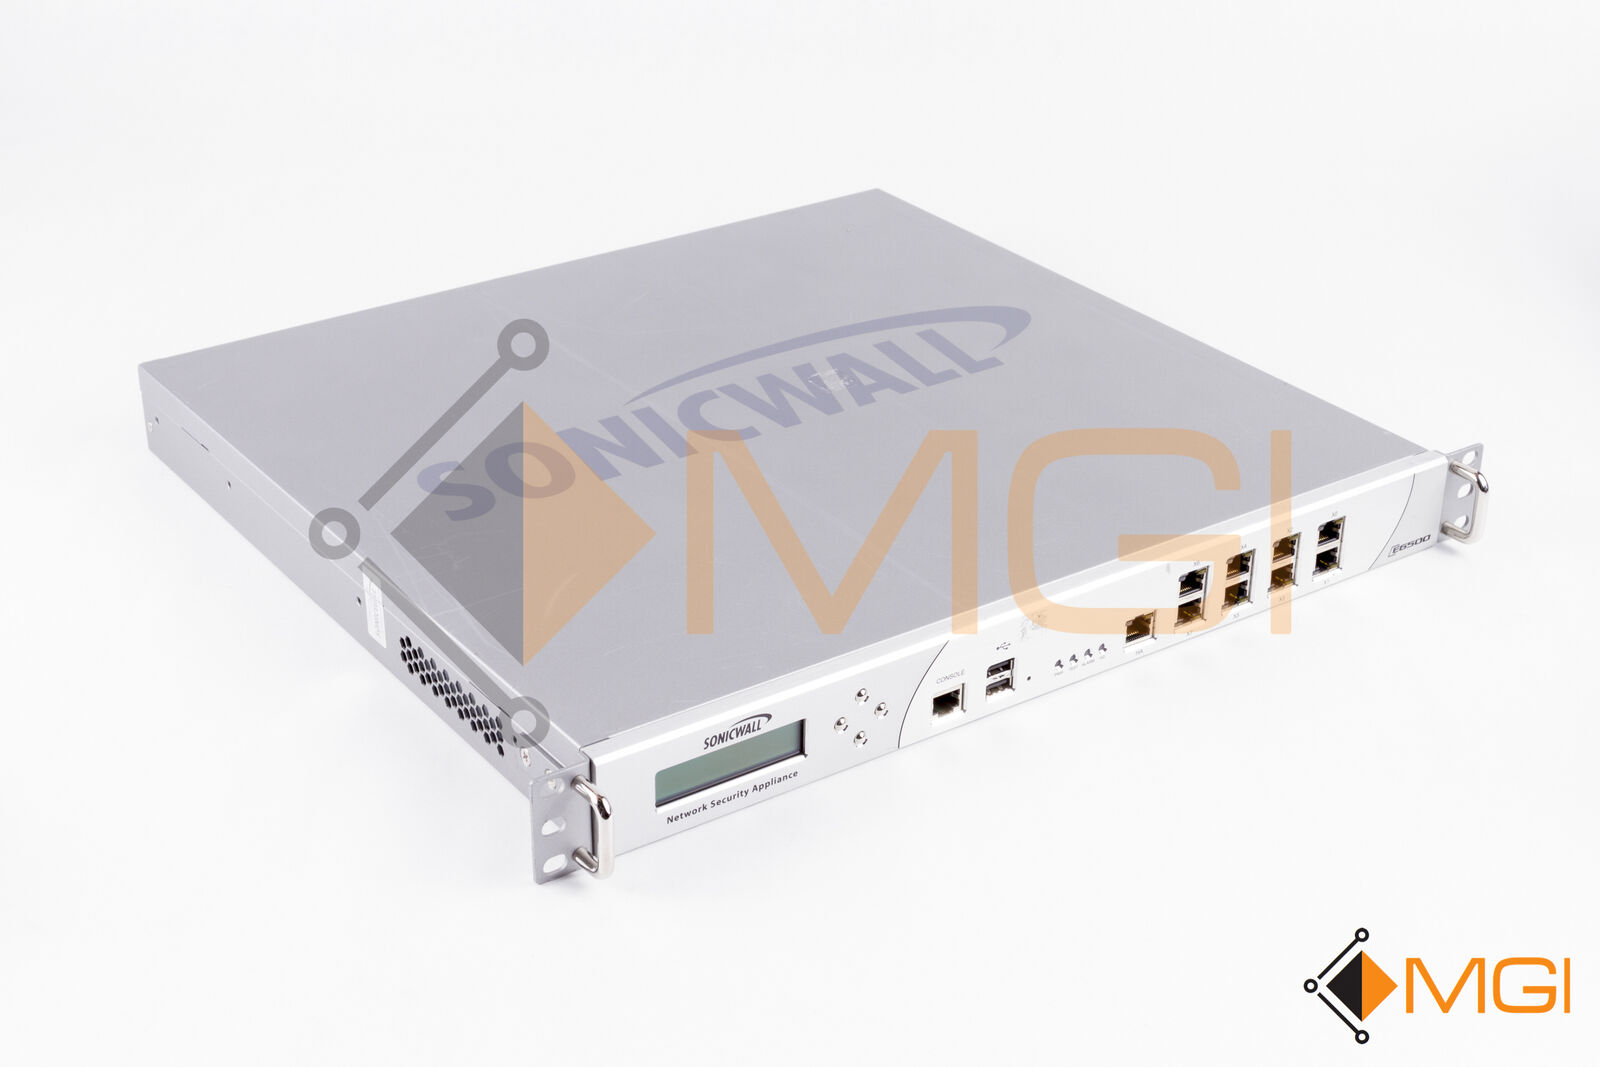 SONICWALL FIREWALL NETWORK SECURITY APPLIANCE E6500 DML // 1RK22-074